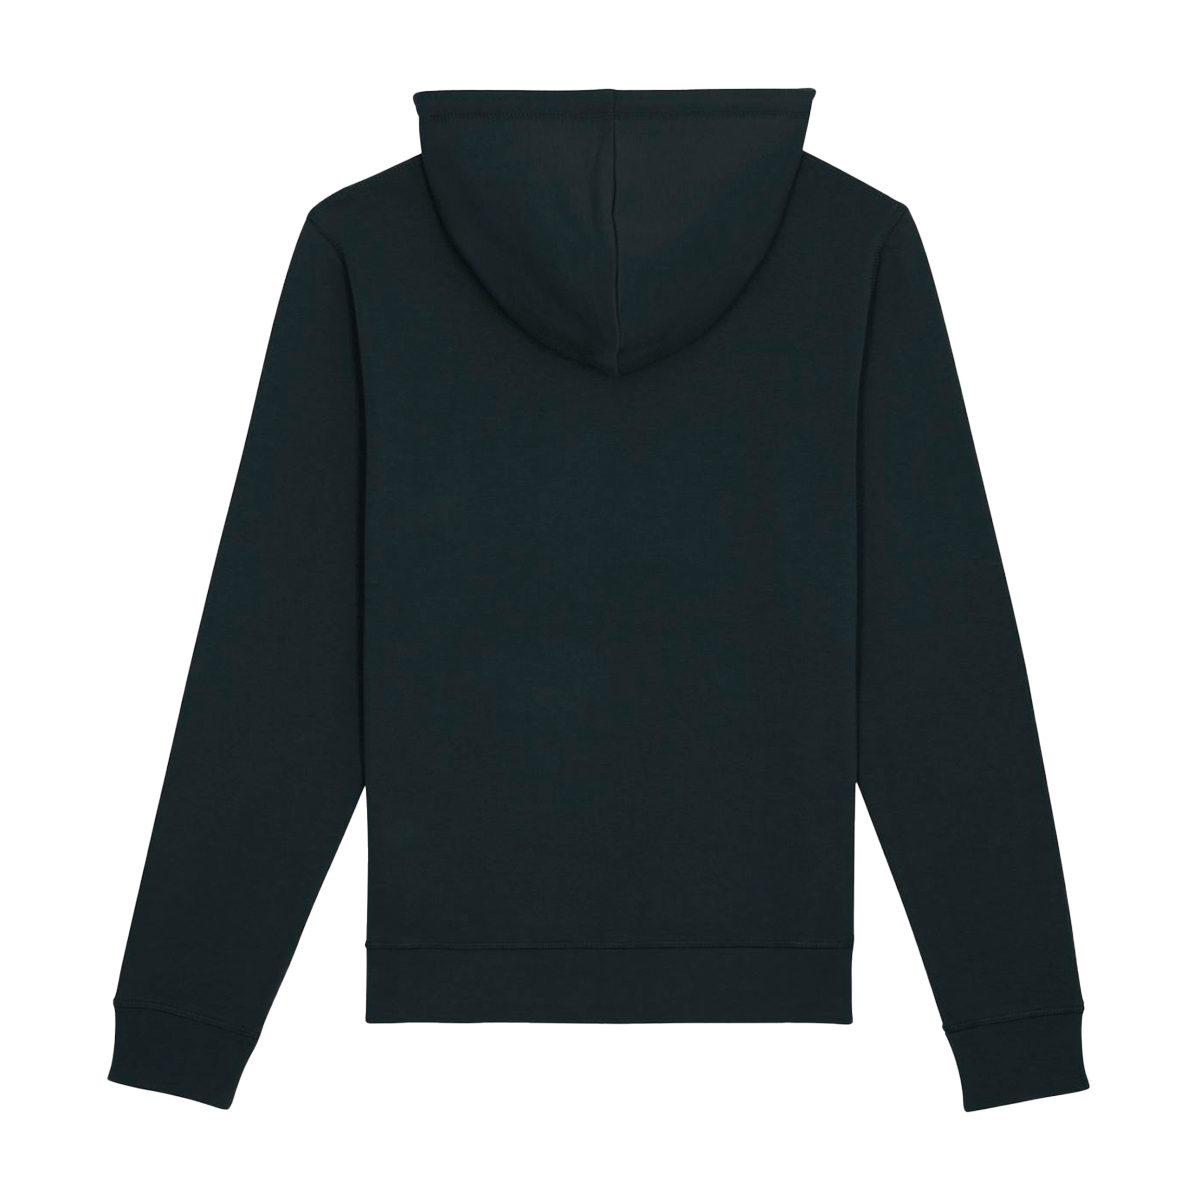 GMBN Core Black Sweatshirt - Back